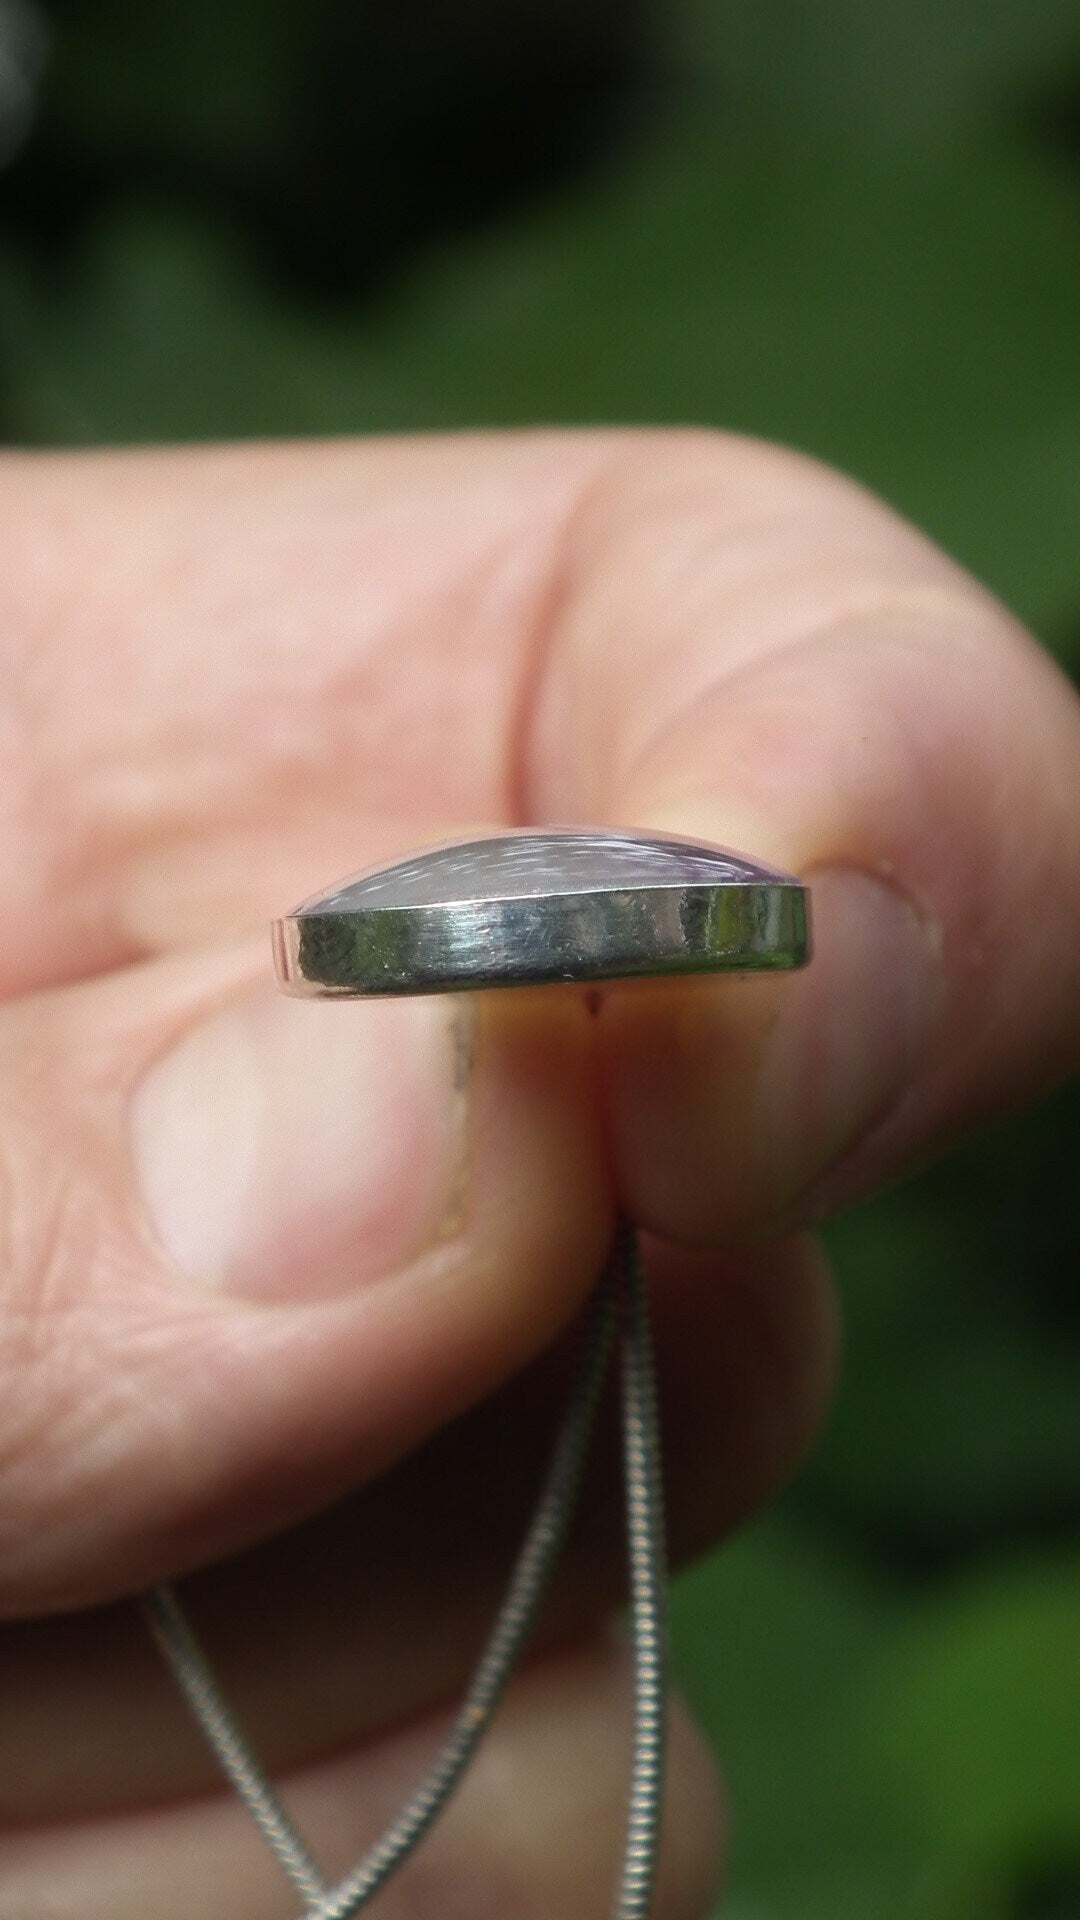 Fluorite pendant in sterling silver setting